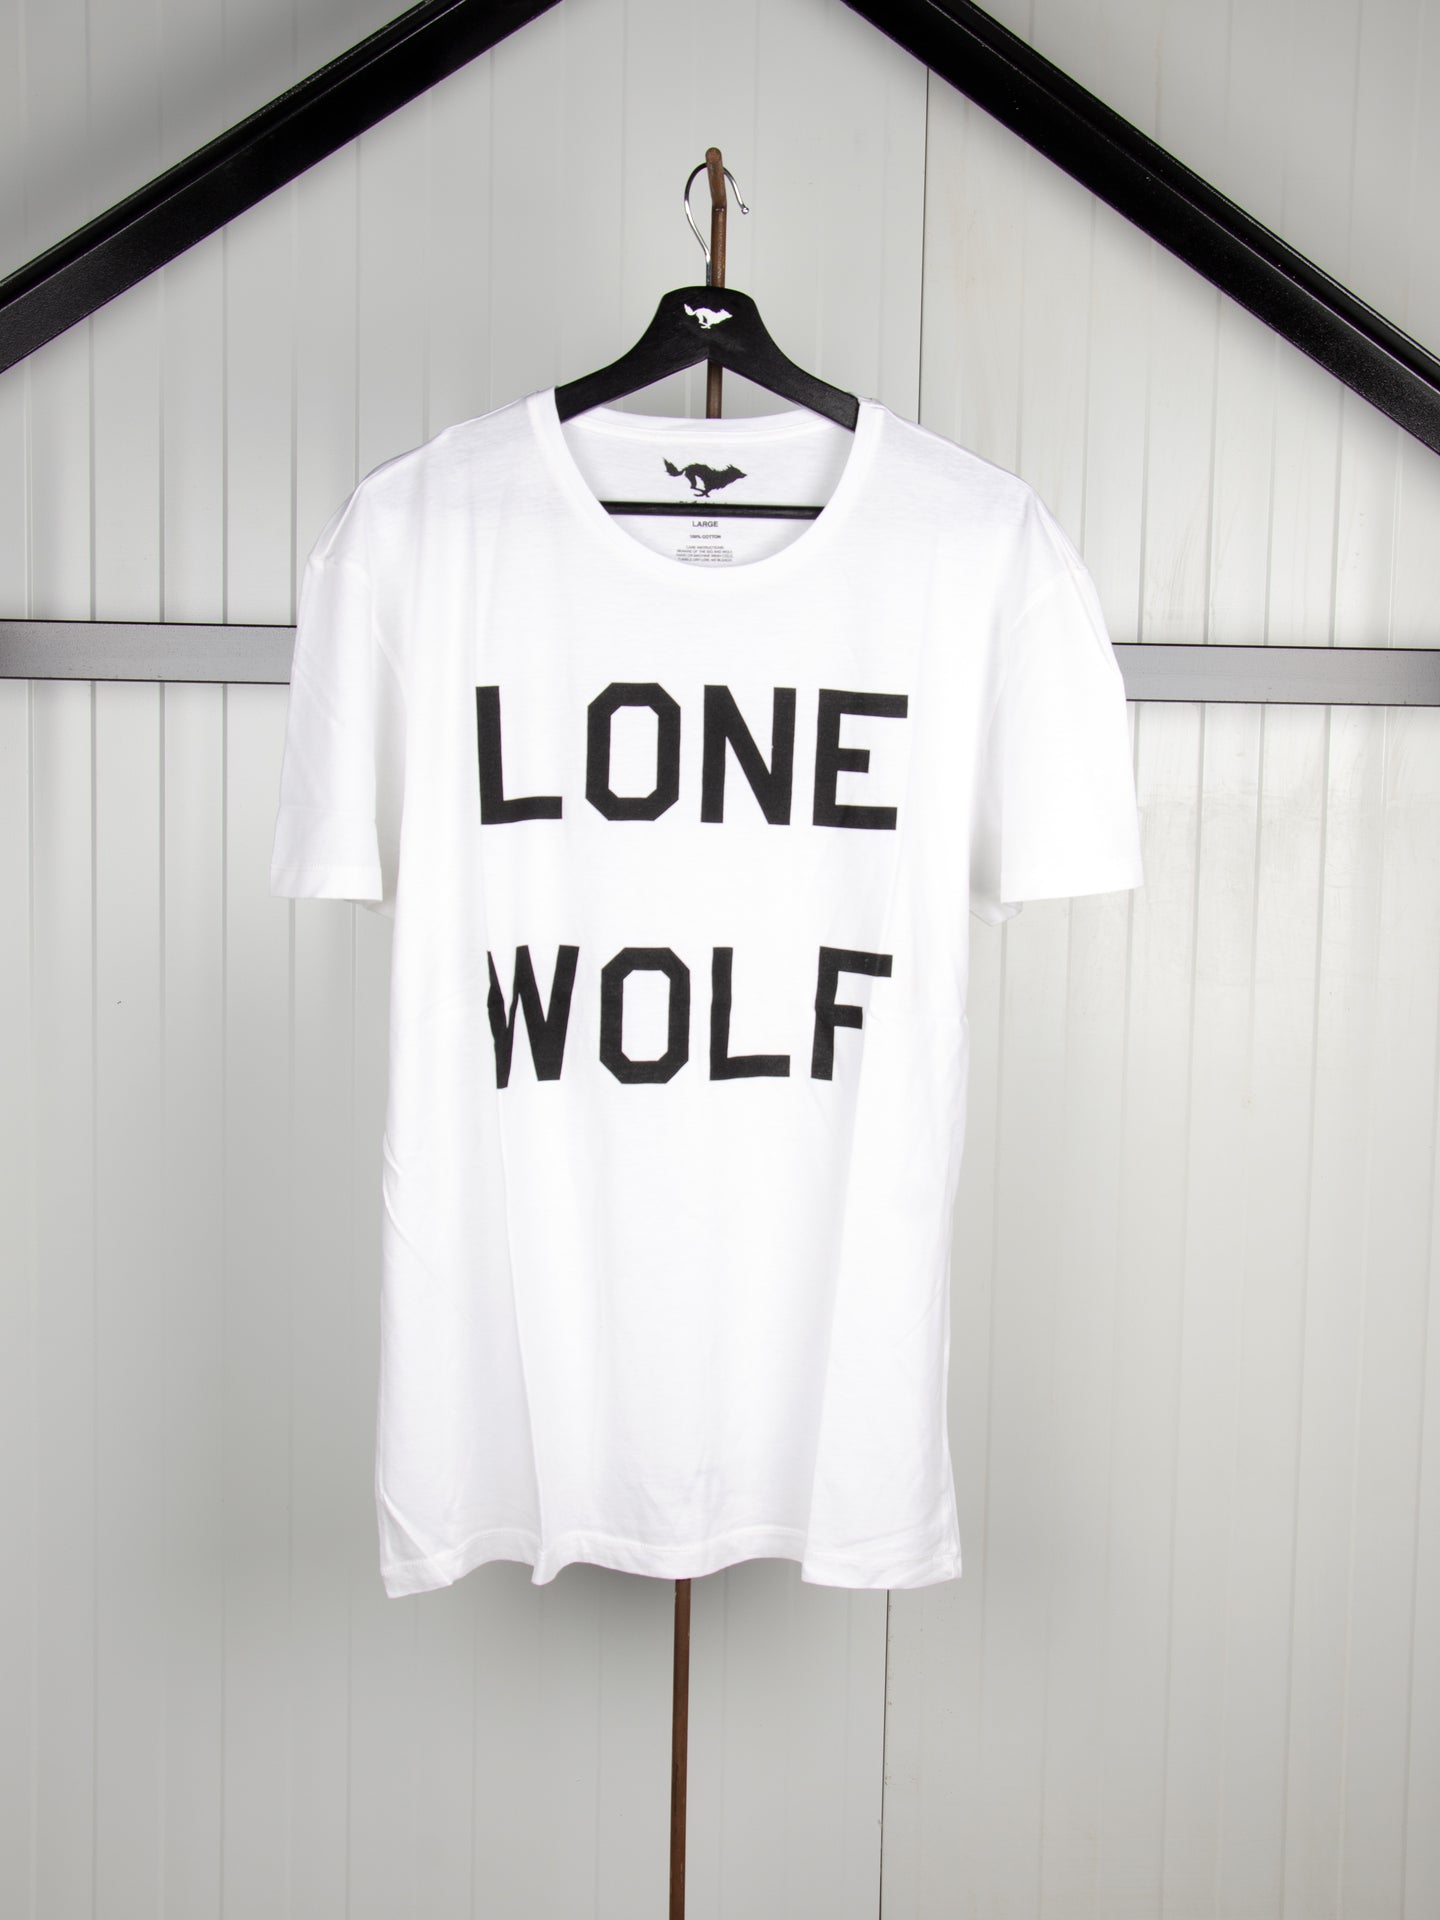 N.O.S. Lone Wolf White T-Shirt